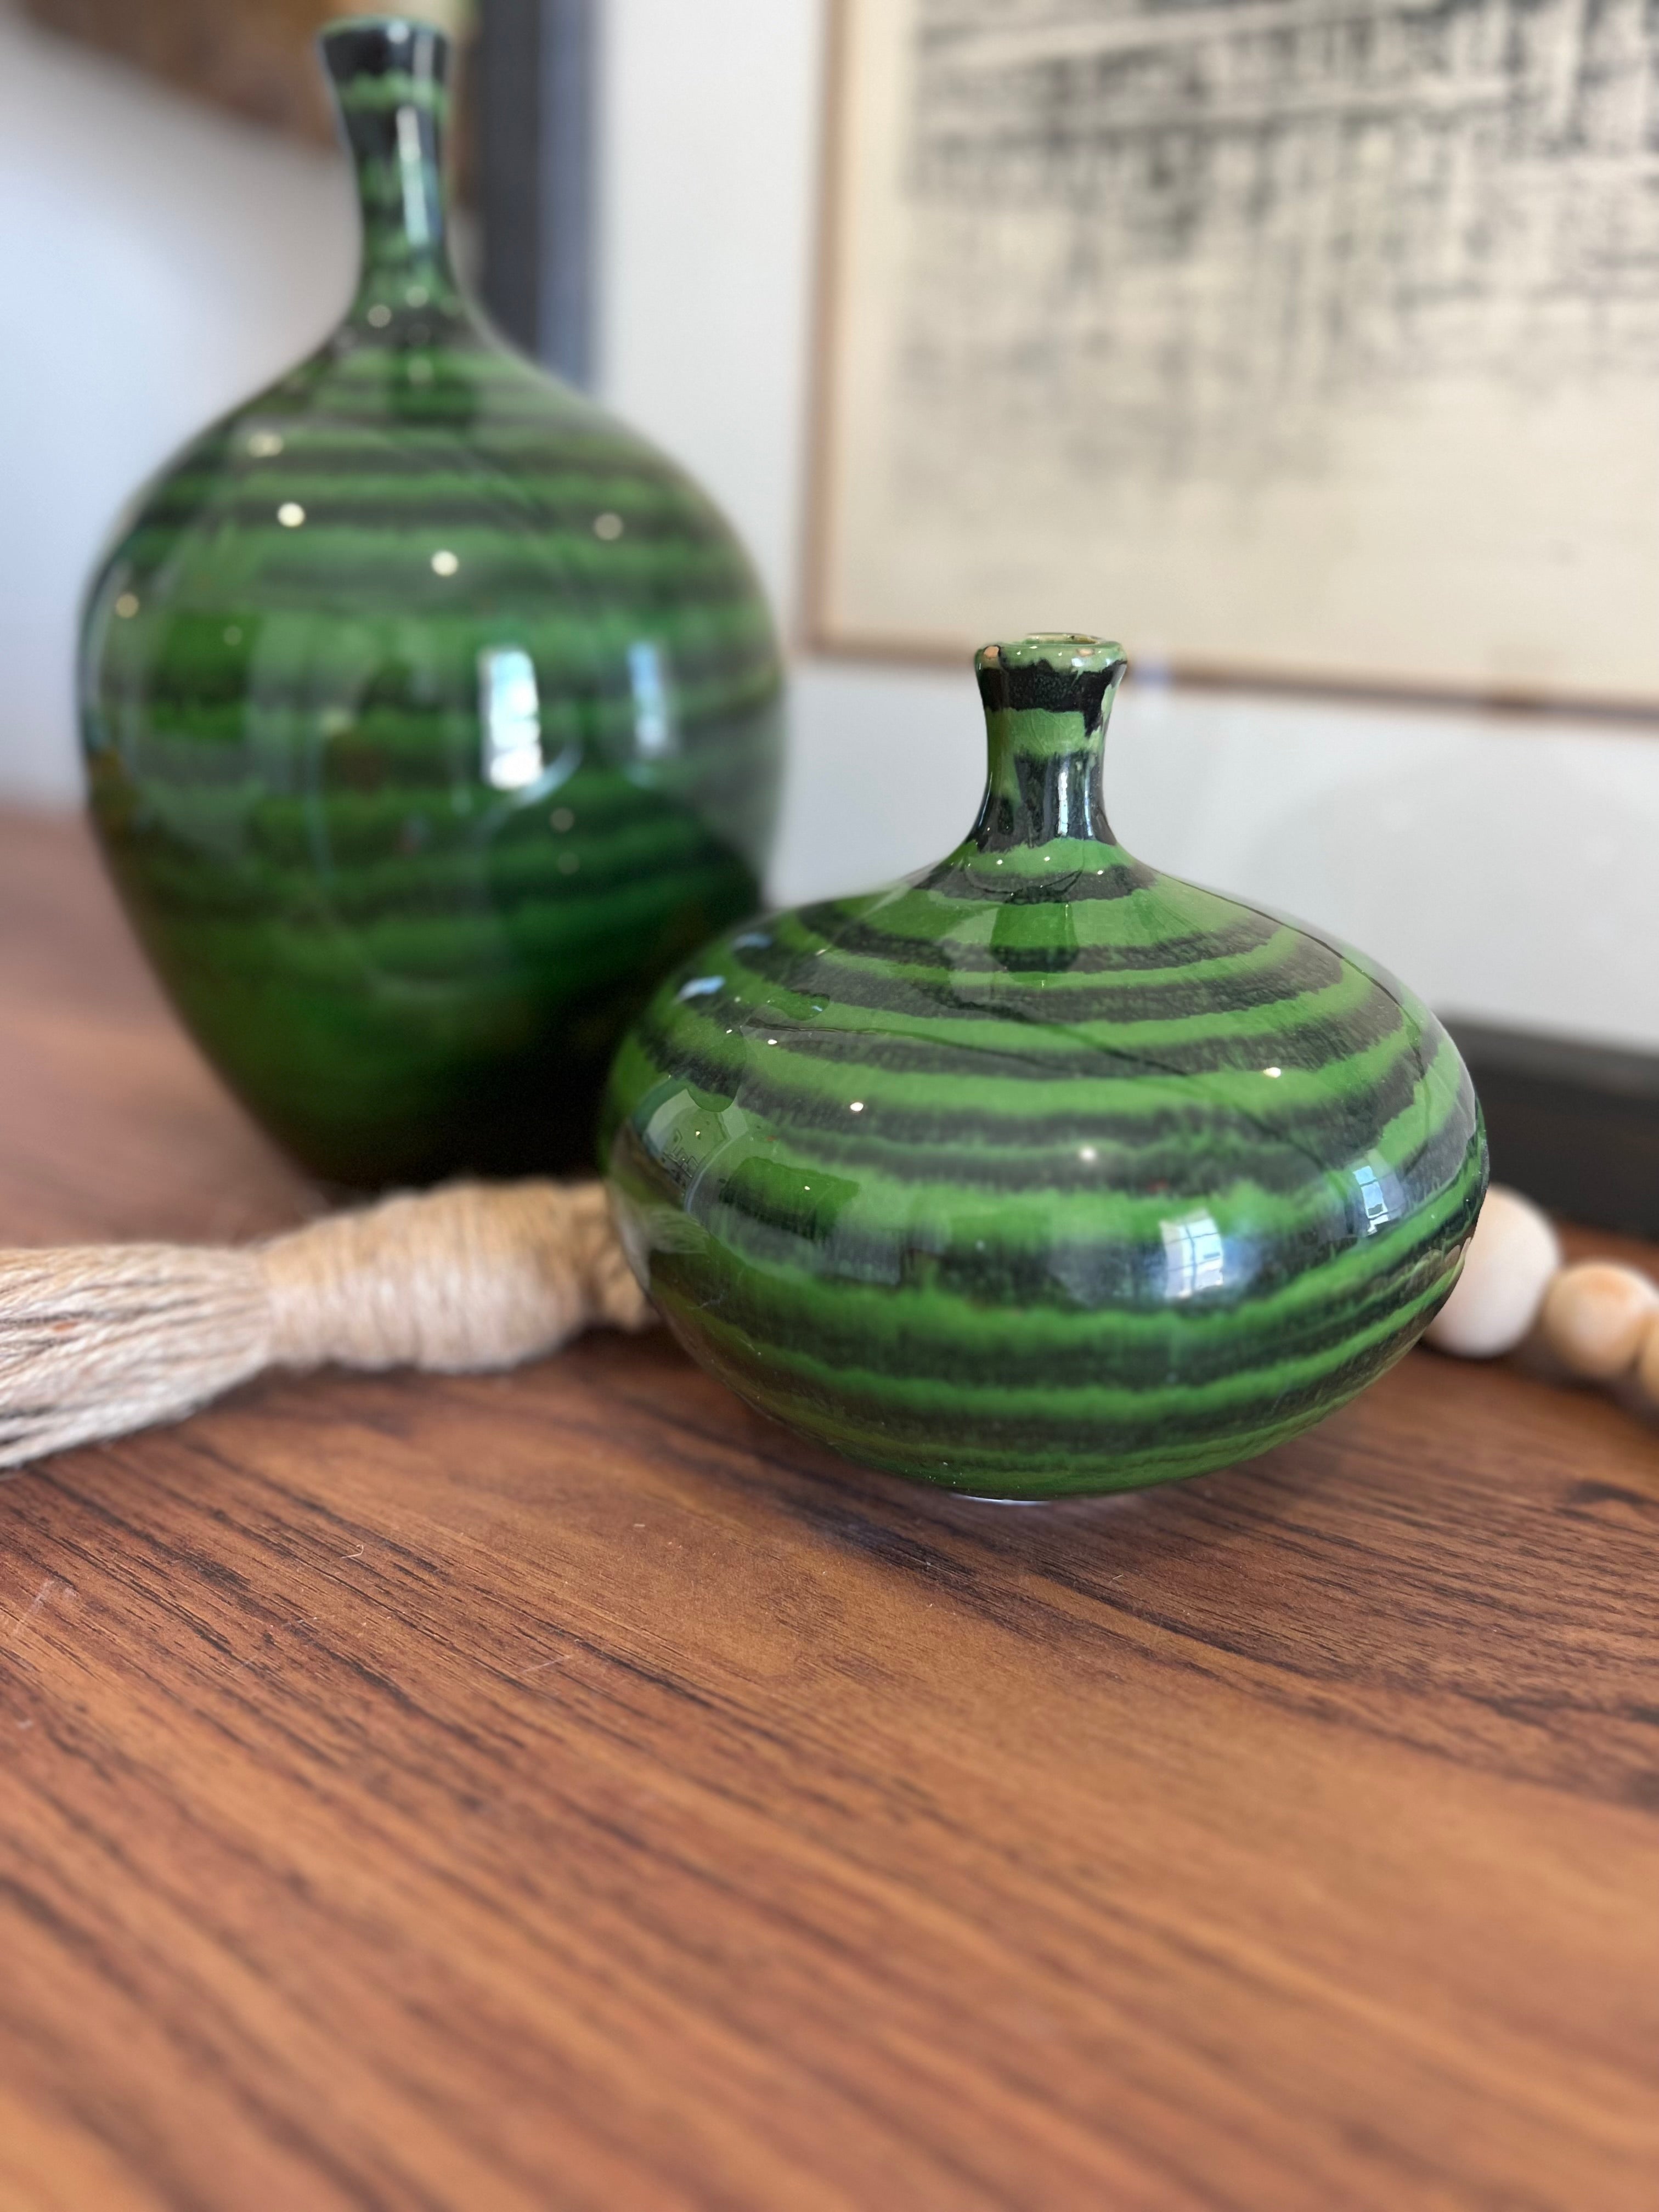 Stoneware Vase Green Malachite Glaze - Small